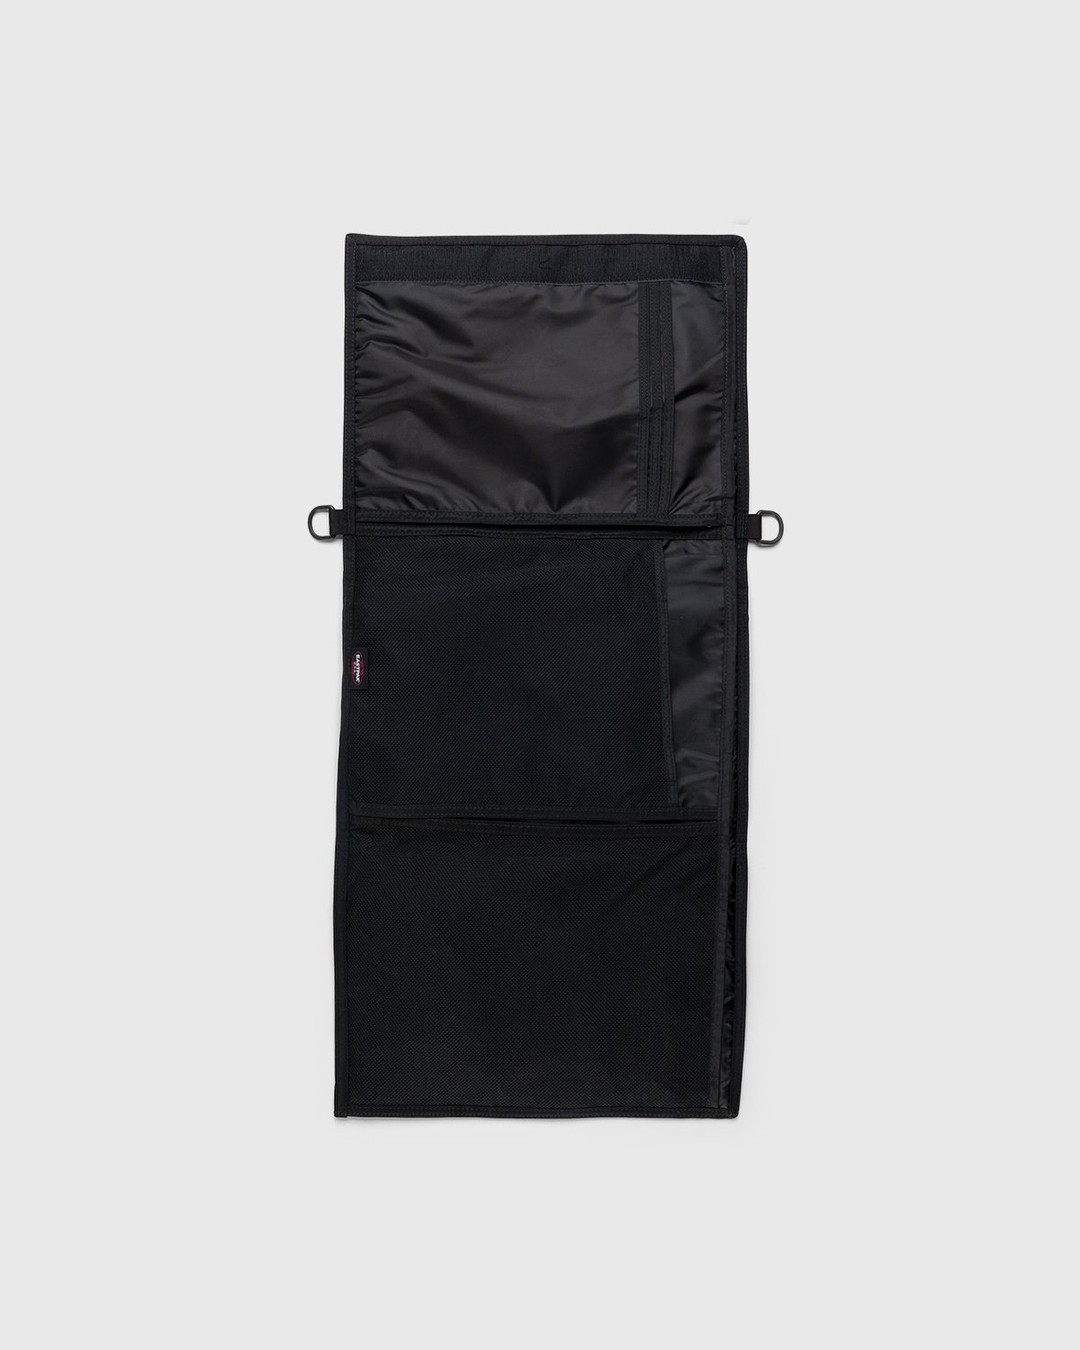 MM6 Maison Margiela x Eastpak – Borsa Tracolla Shoulder Bag Black - Bags - Black - Image 3